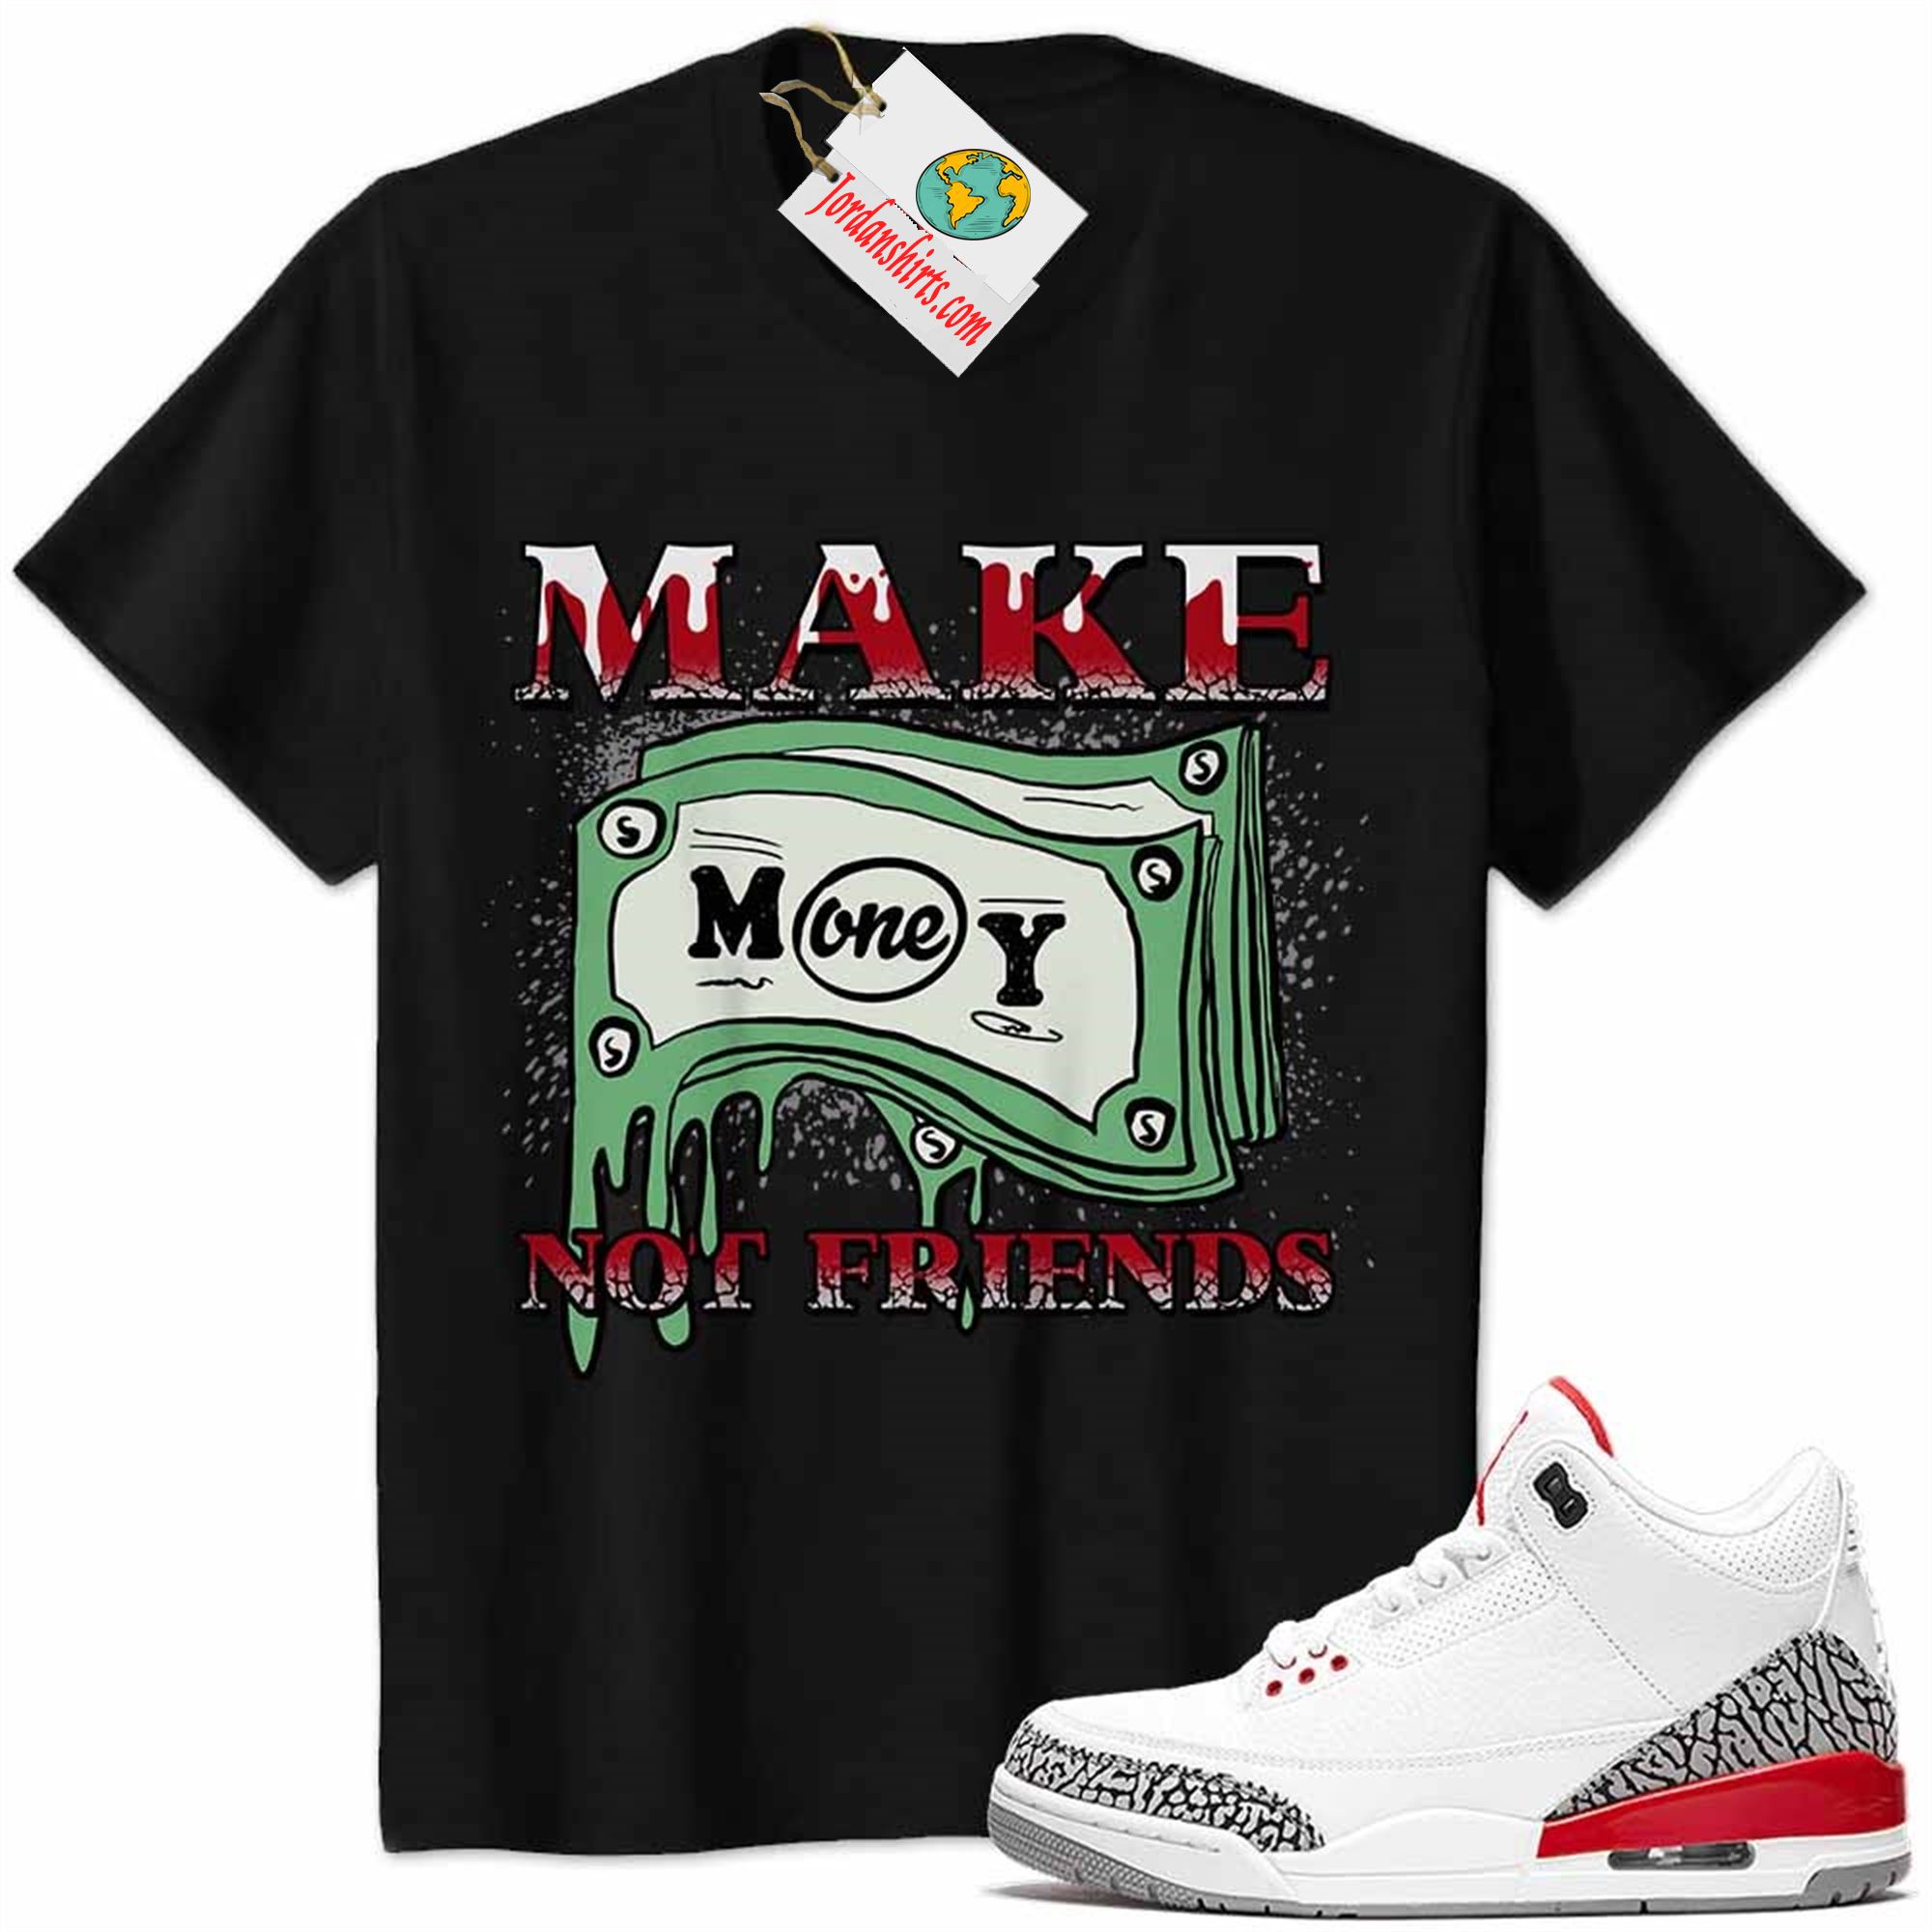 Jordan 3 Shirt, Jordan 3 Katrina Shirt Make Money Graffiti Black Full Size Up To 5xl